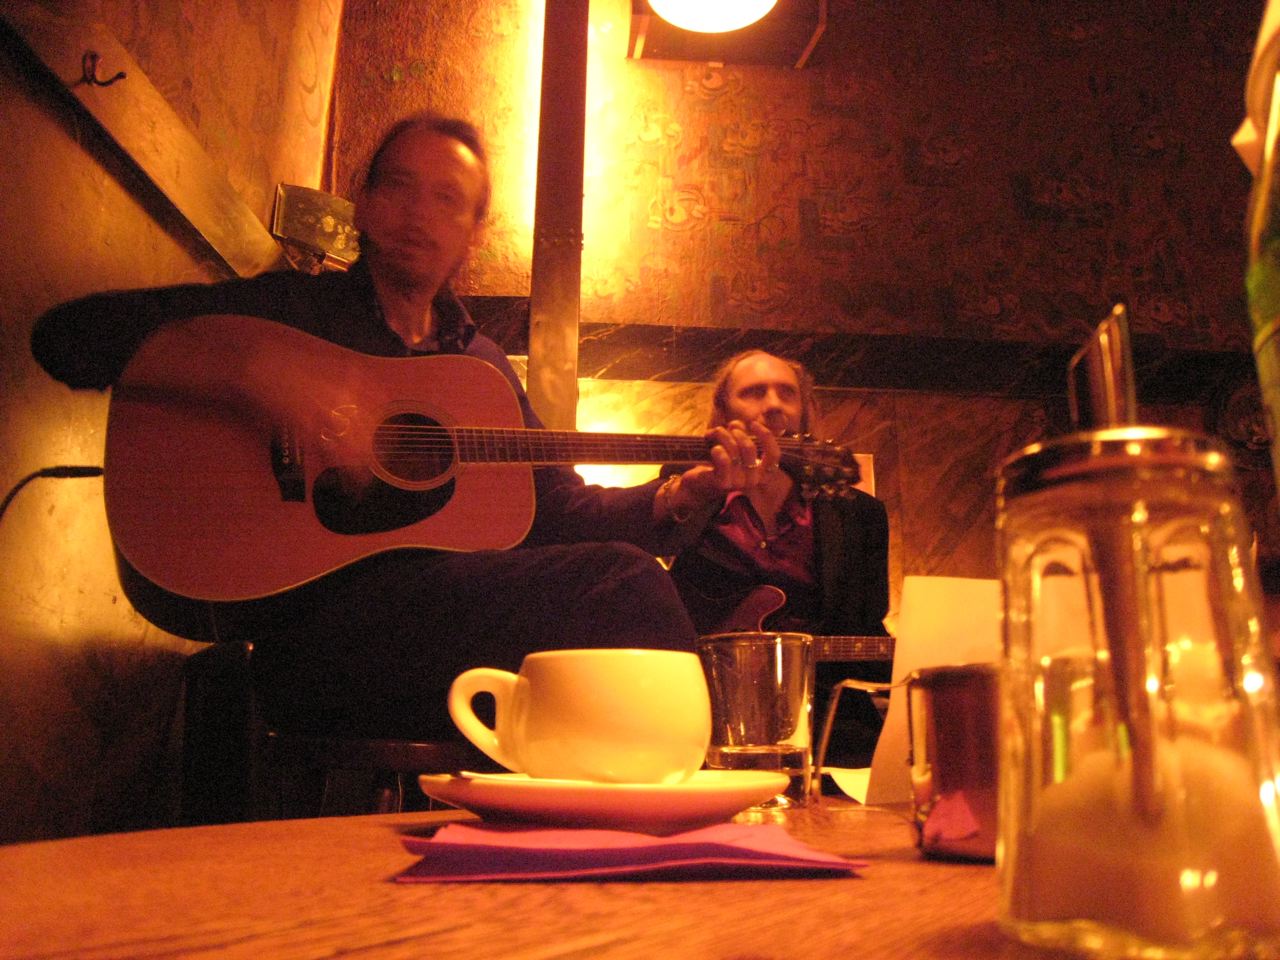 Adams & Shoenfelt @ Café Kreuzberg, Berlin, 27.10.2007, photo by David Marutschke